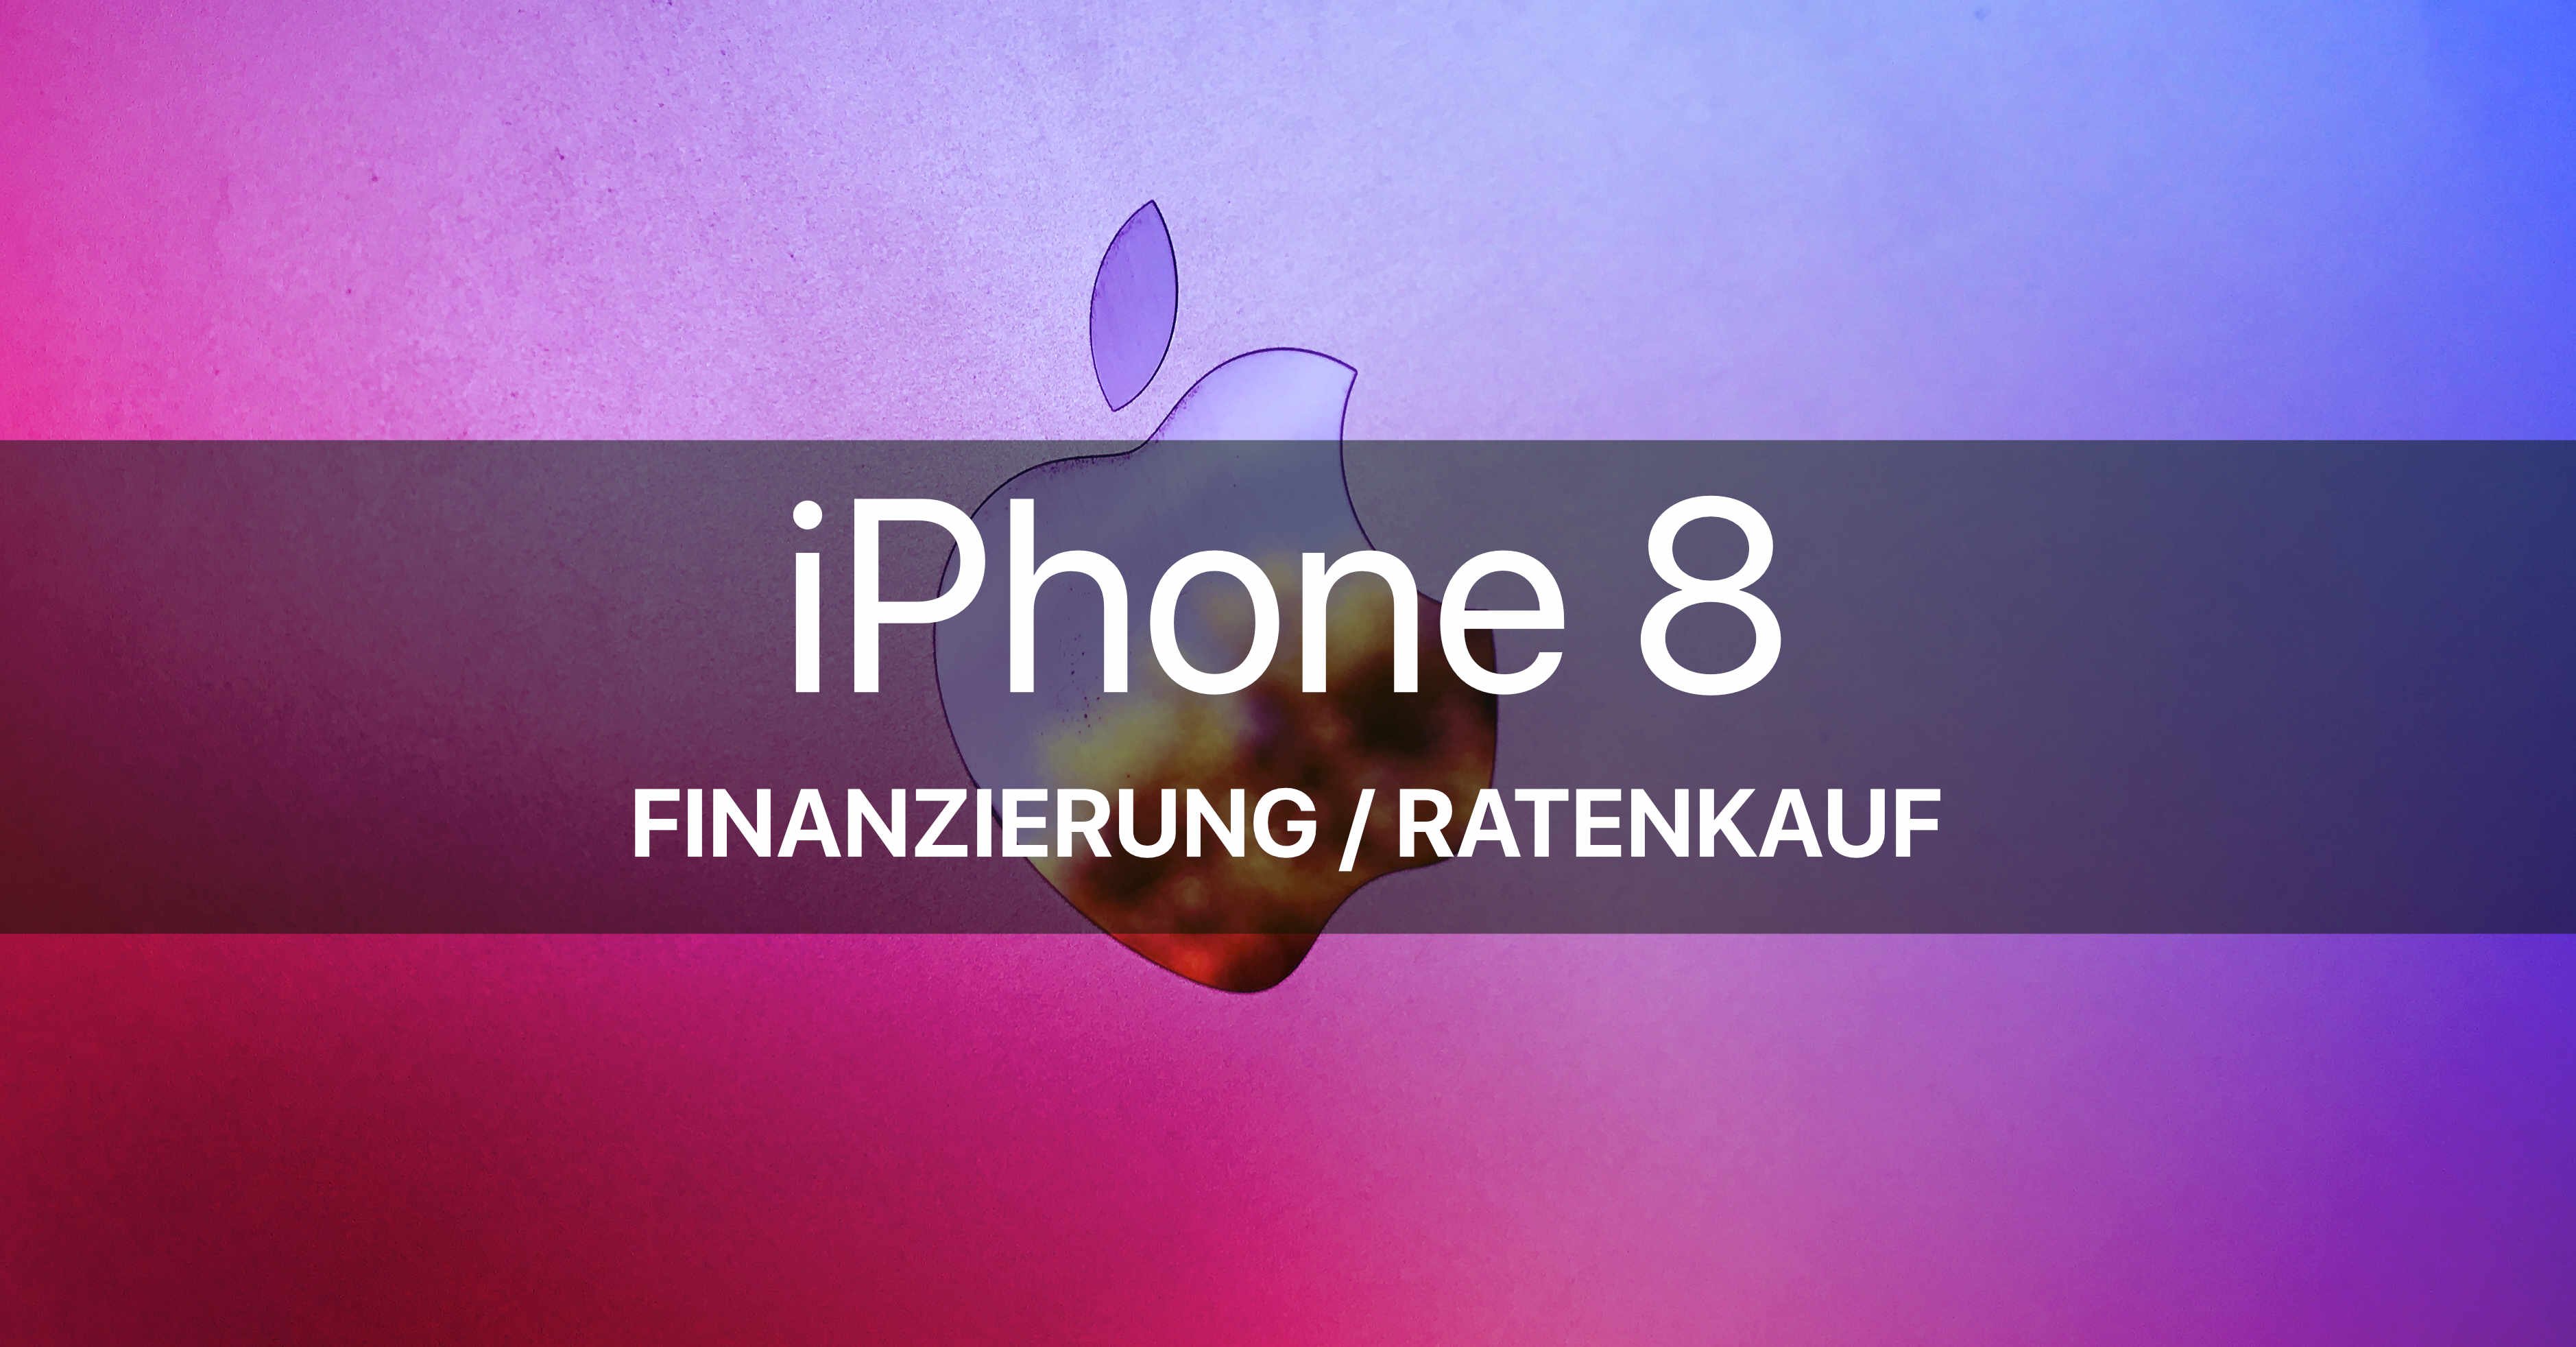 iPhone 8 finanzieren: iPhone Ratenkauf & Ratenzahlung 1